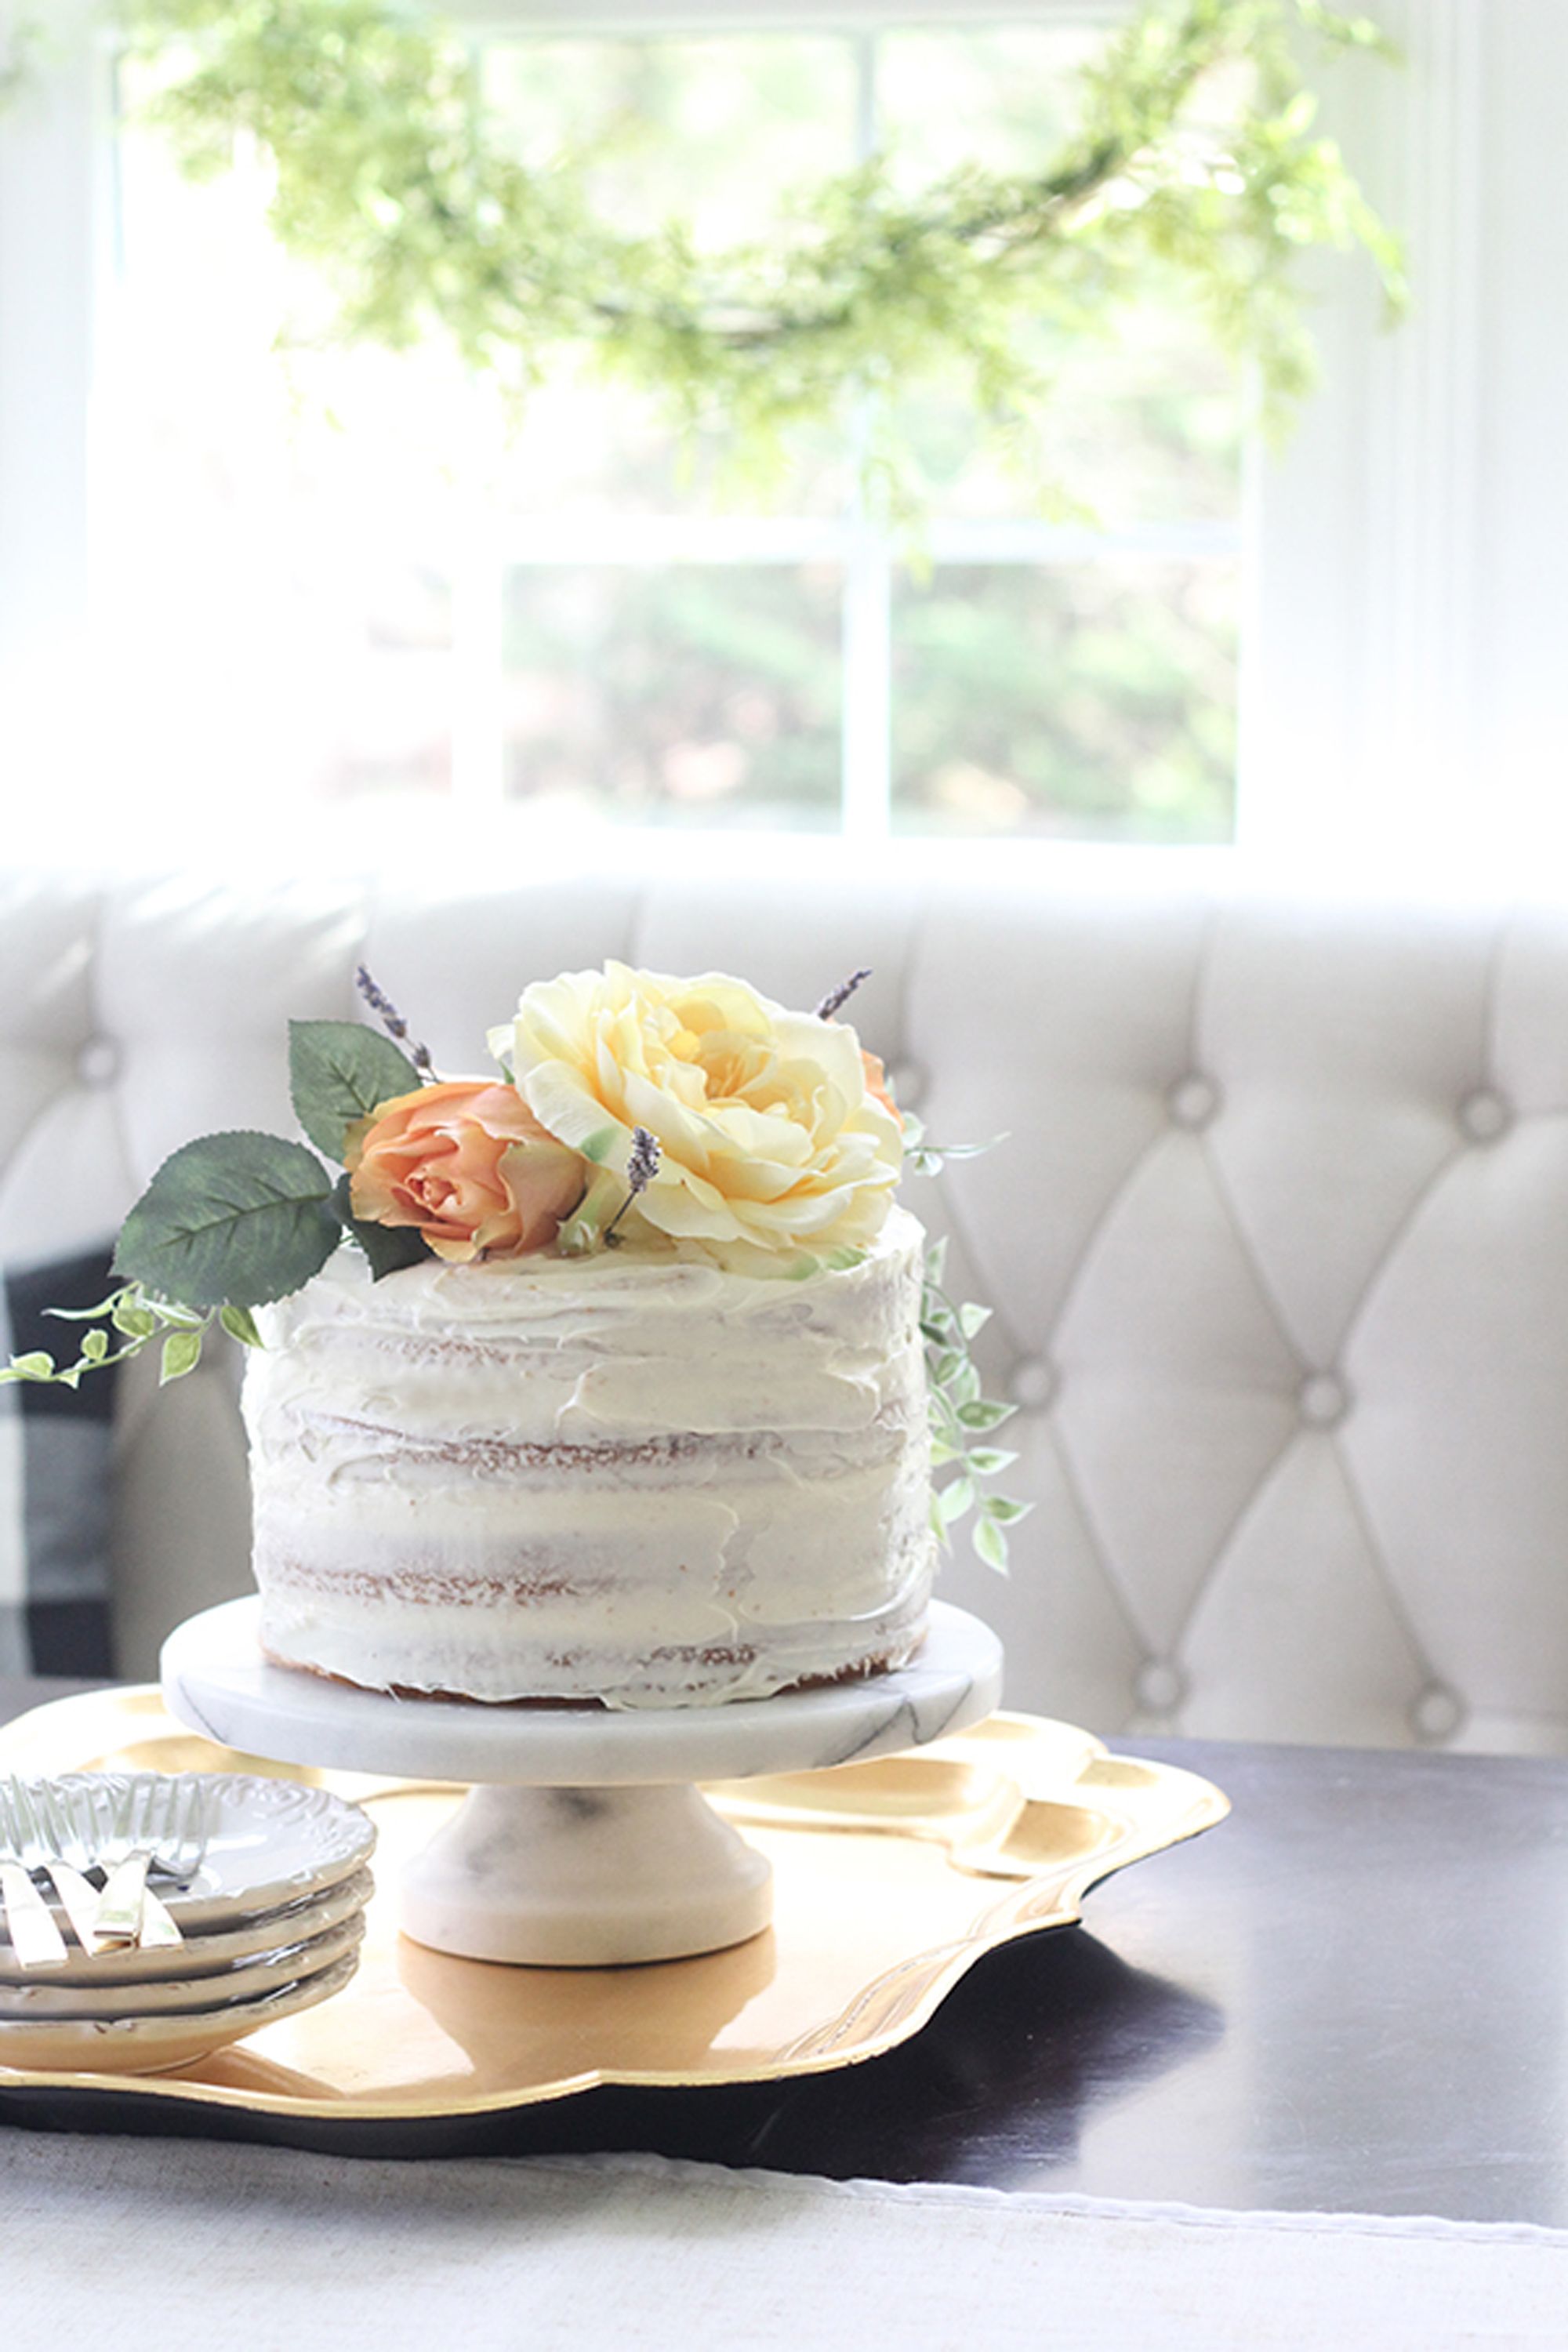 9,247 Simple Wedding Cake Images, Stock Photos & Vectors | Shutterstock